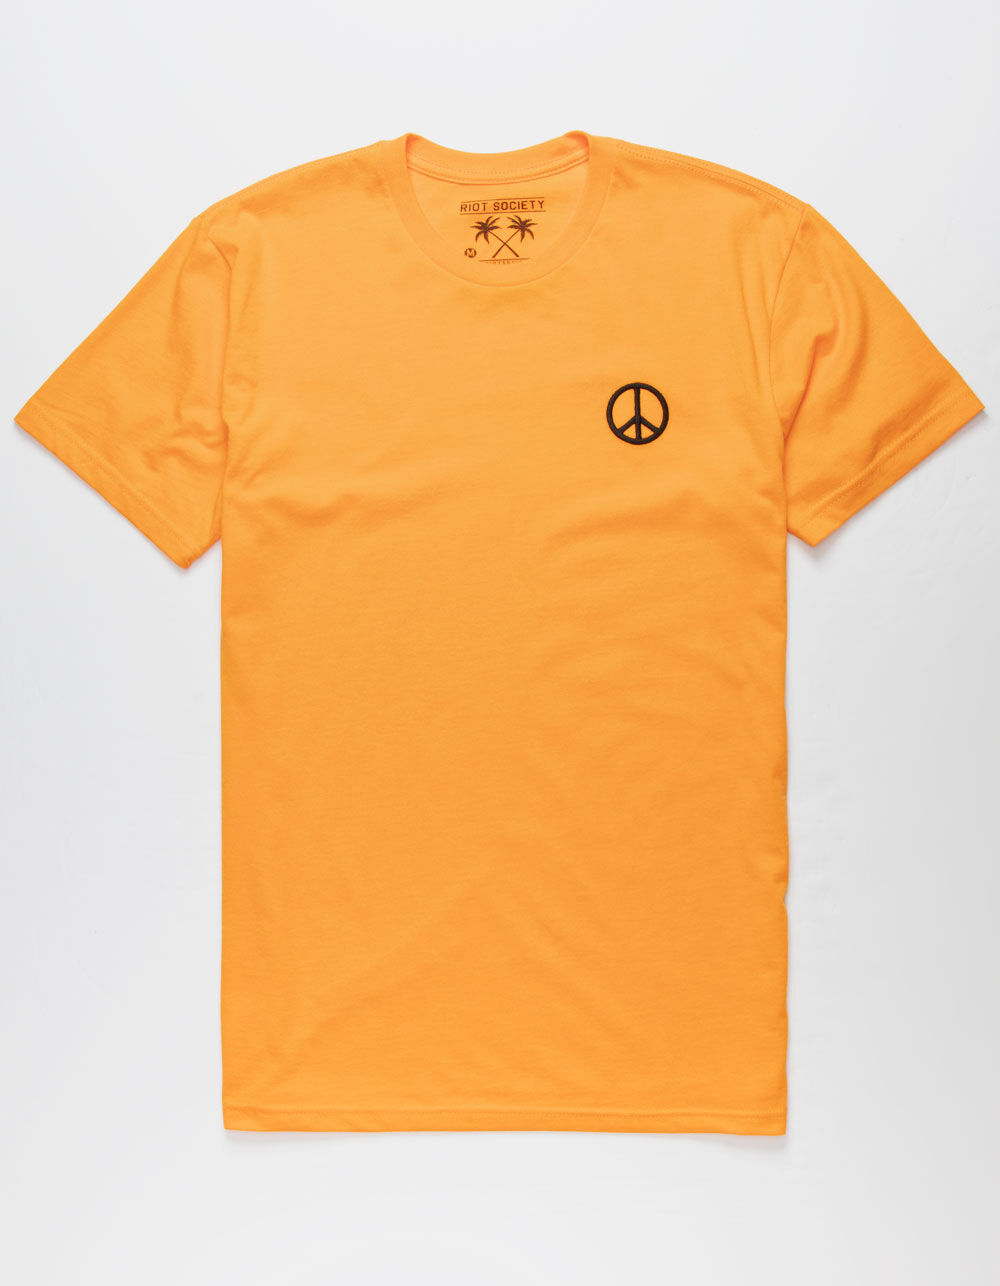 RIOT SOCIETY Peace Sign Embroidered Mens Orange T-Shirt - ORANGE | Tillys